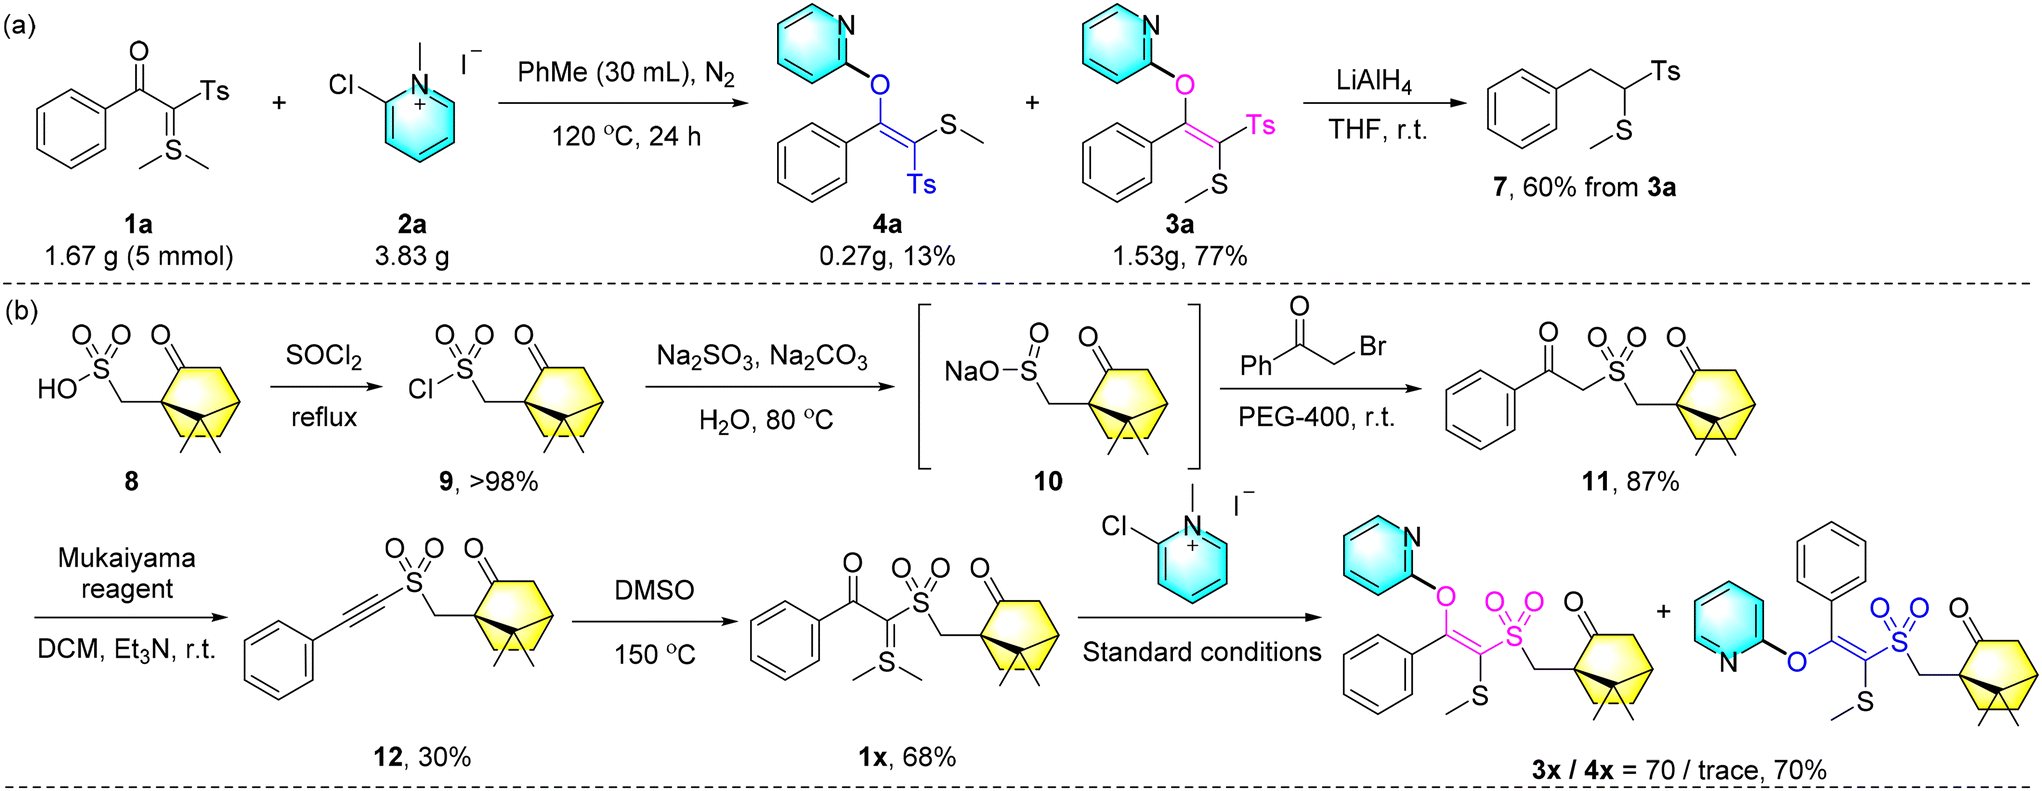 Halide-promoted pyridinylation of α-acylmethylides with 2-halo-1 